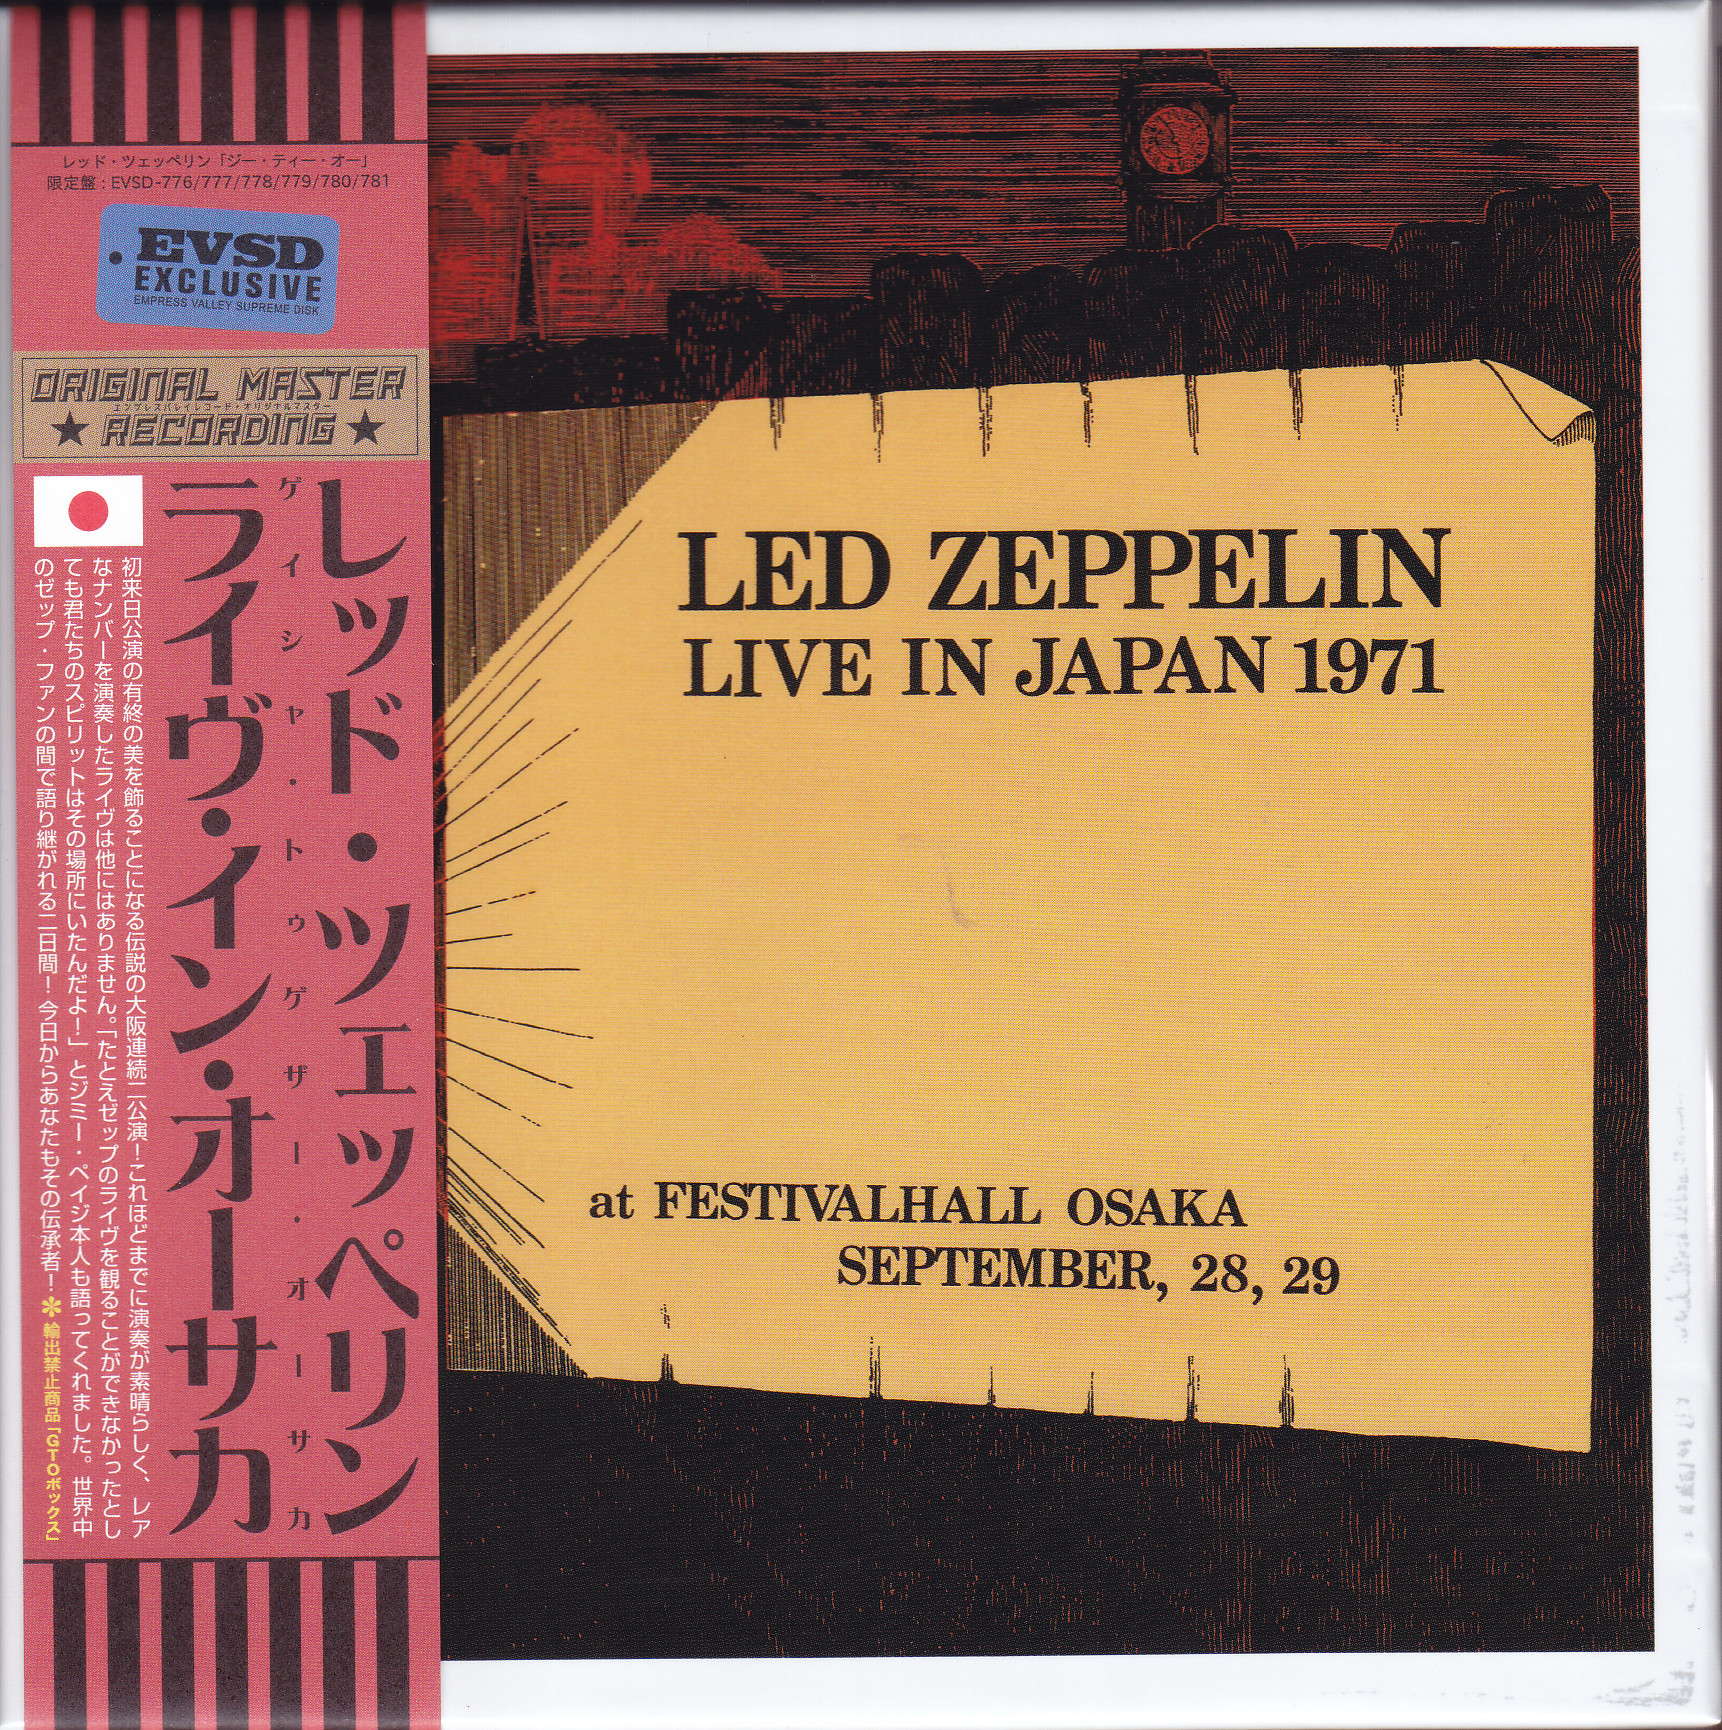 Led Zeppelin – For Badge Holders Only - EVSD BOX - Pink Floyd Live